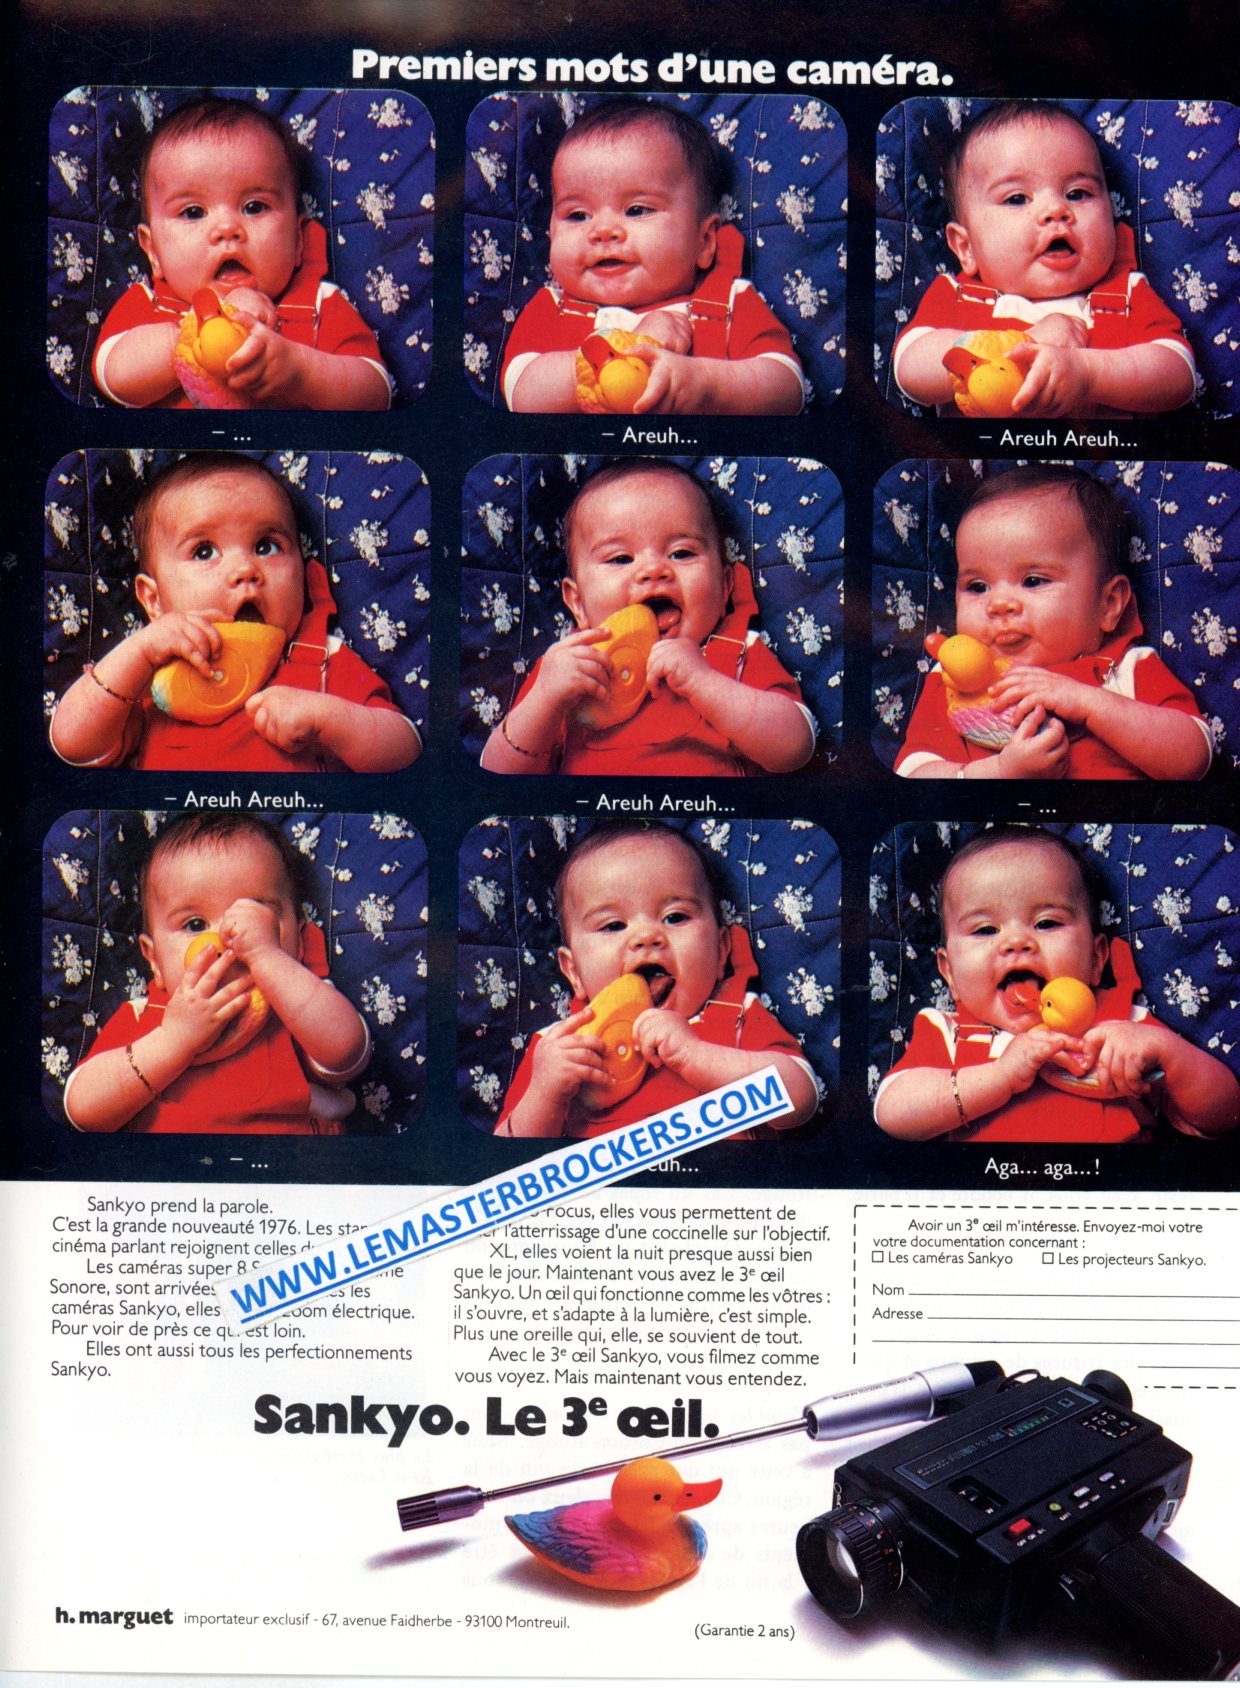 PUBLICITÉ SANKYO S CAMERA SUPER 8 - ADVERTISING 1972